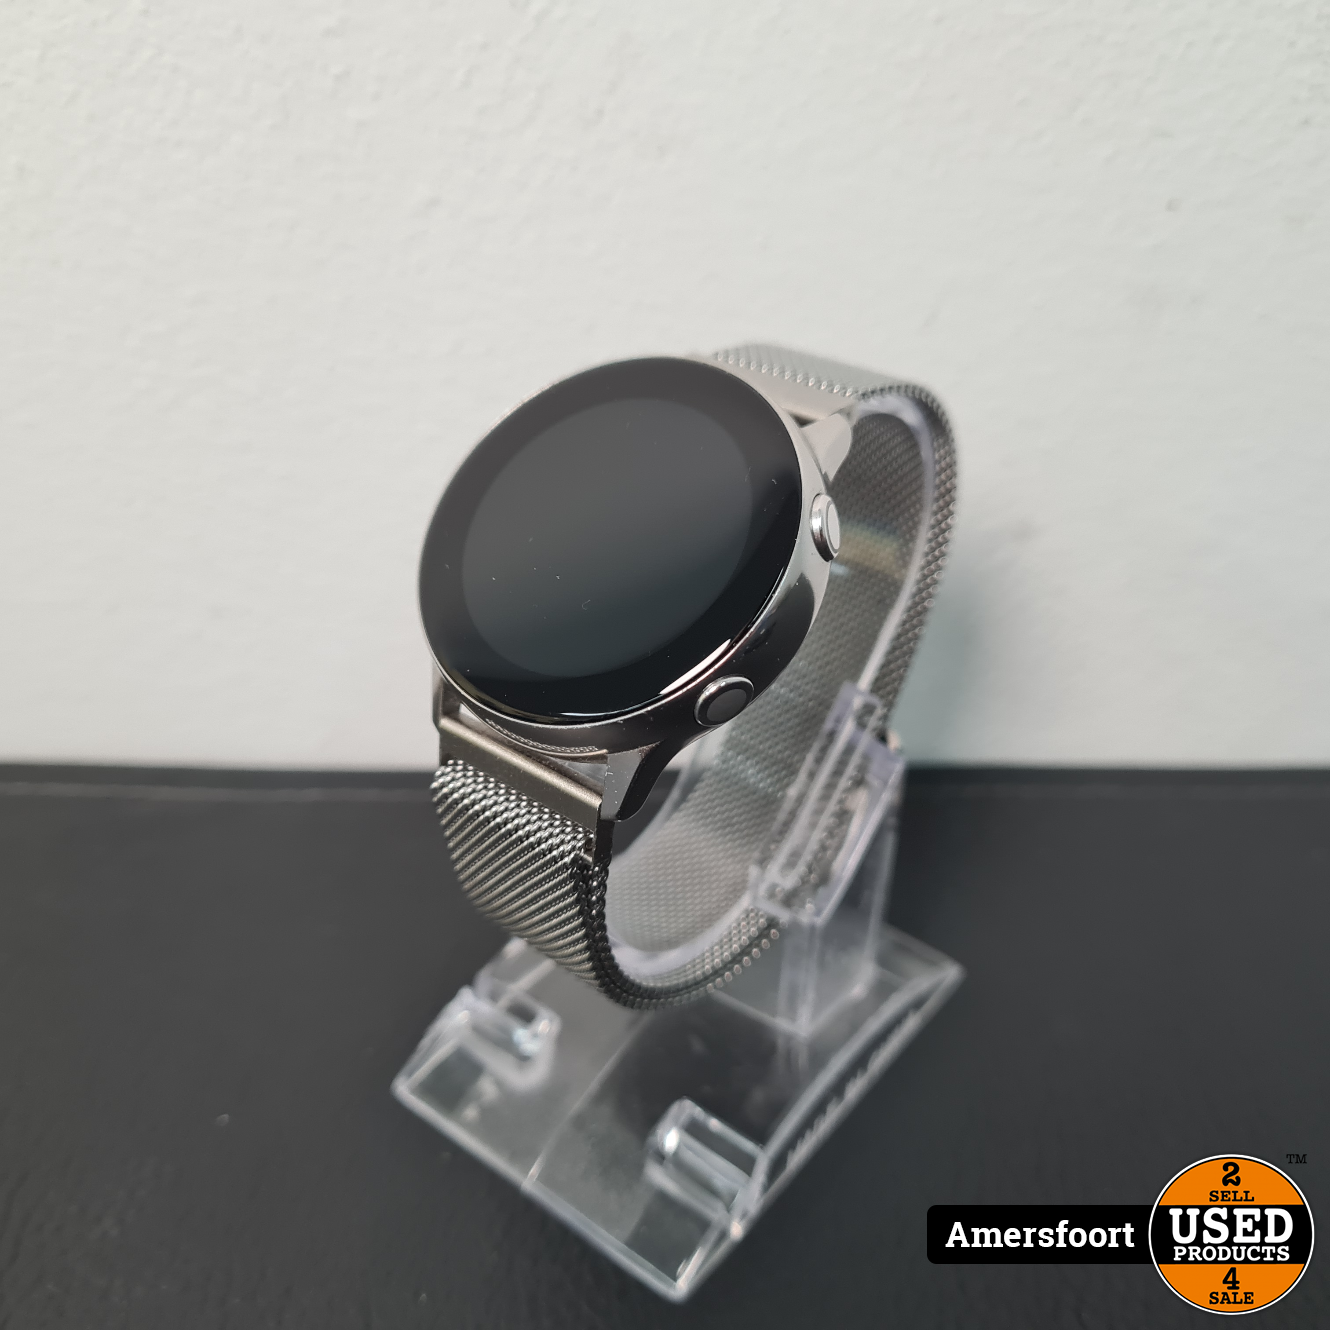 sensatie Quagga Vrijgevigheid Samsung Galaxy Watch Active 1 40mm - Used Products Amersfoort